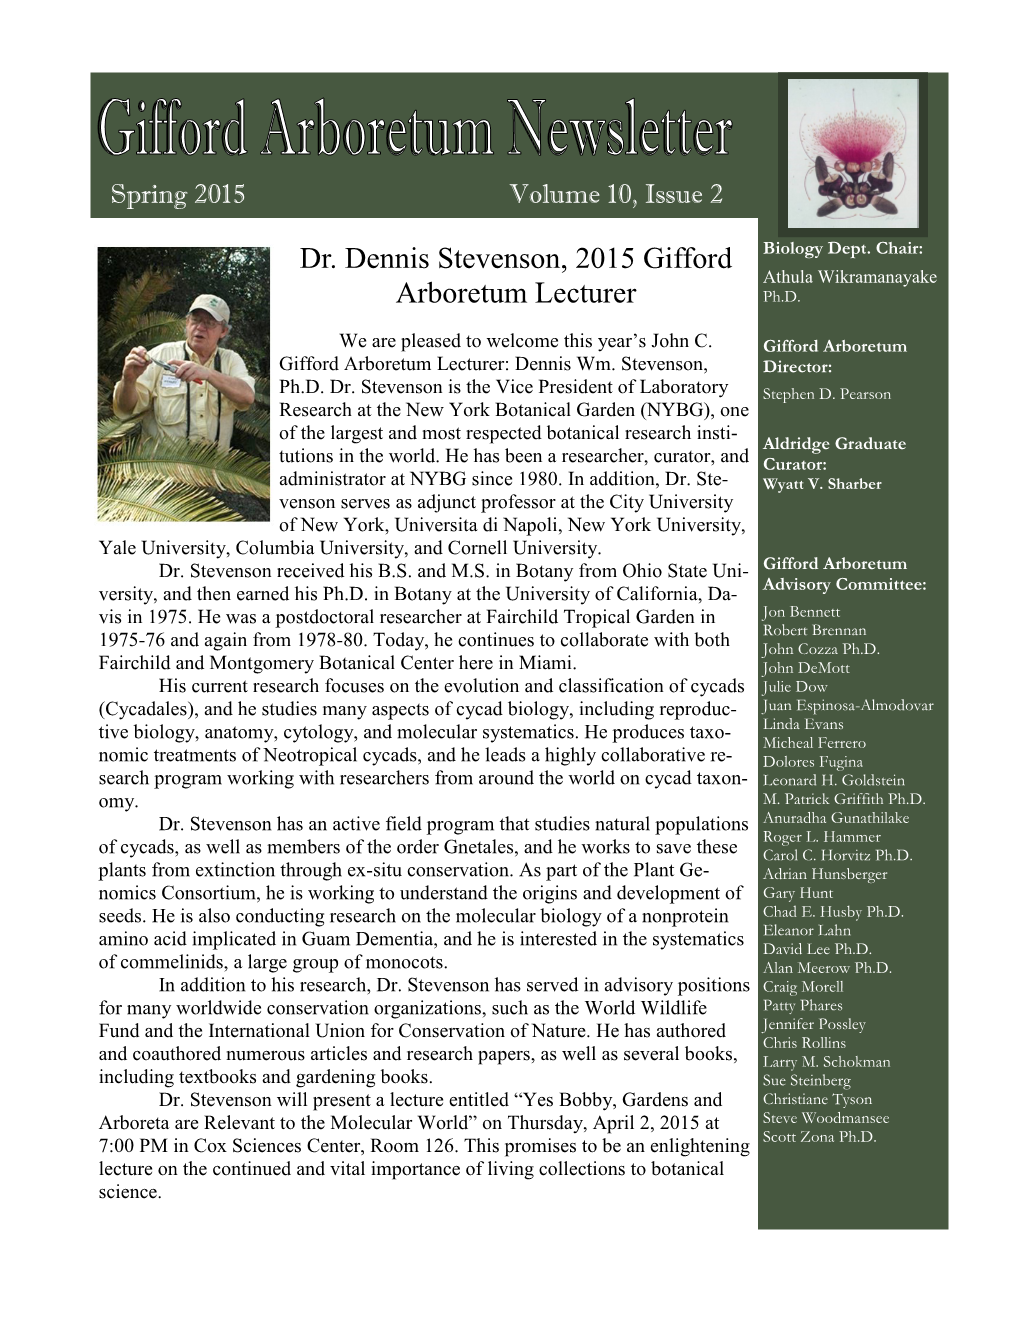 Dr. Dennis Stevenson, 2015 Gifford Arboretum Lecturer